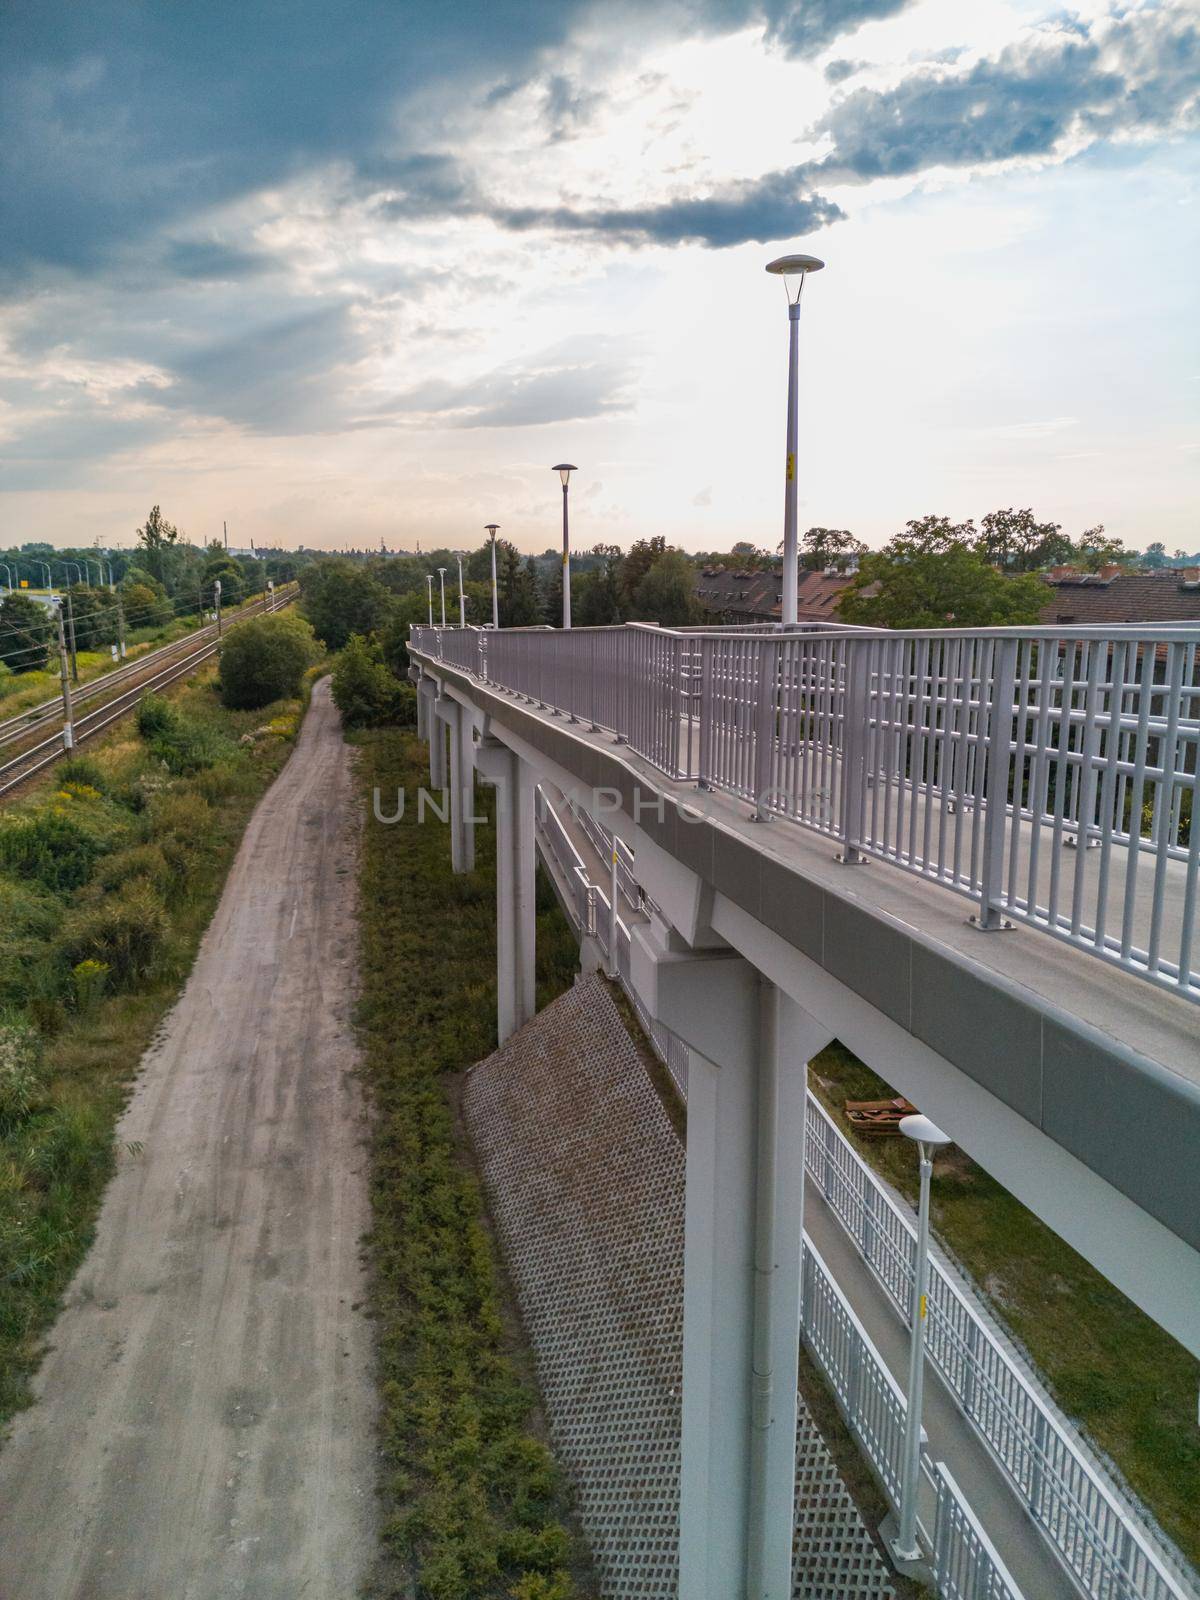 Long high concrete footbridge over city highway by Wierzchu